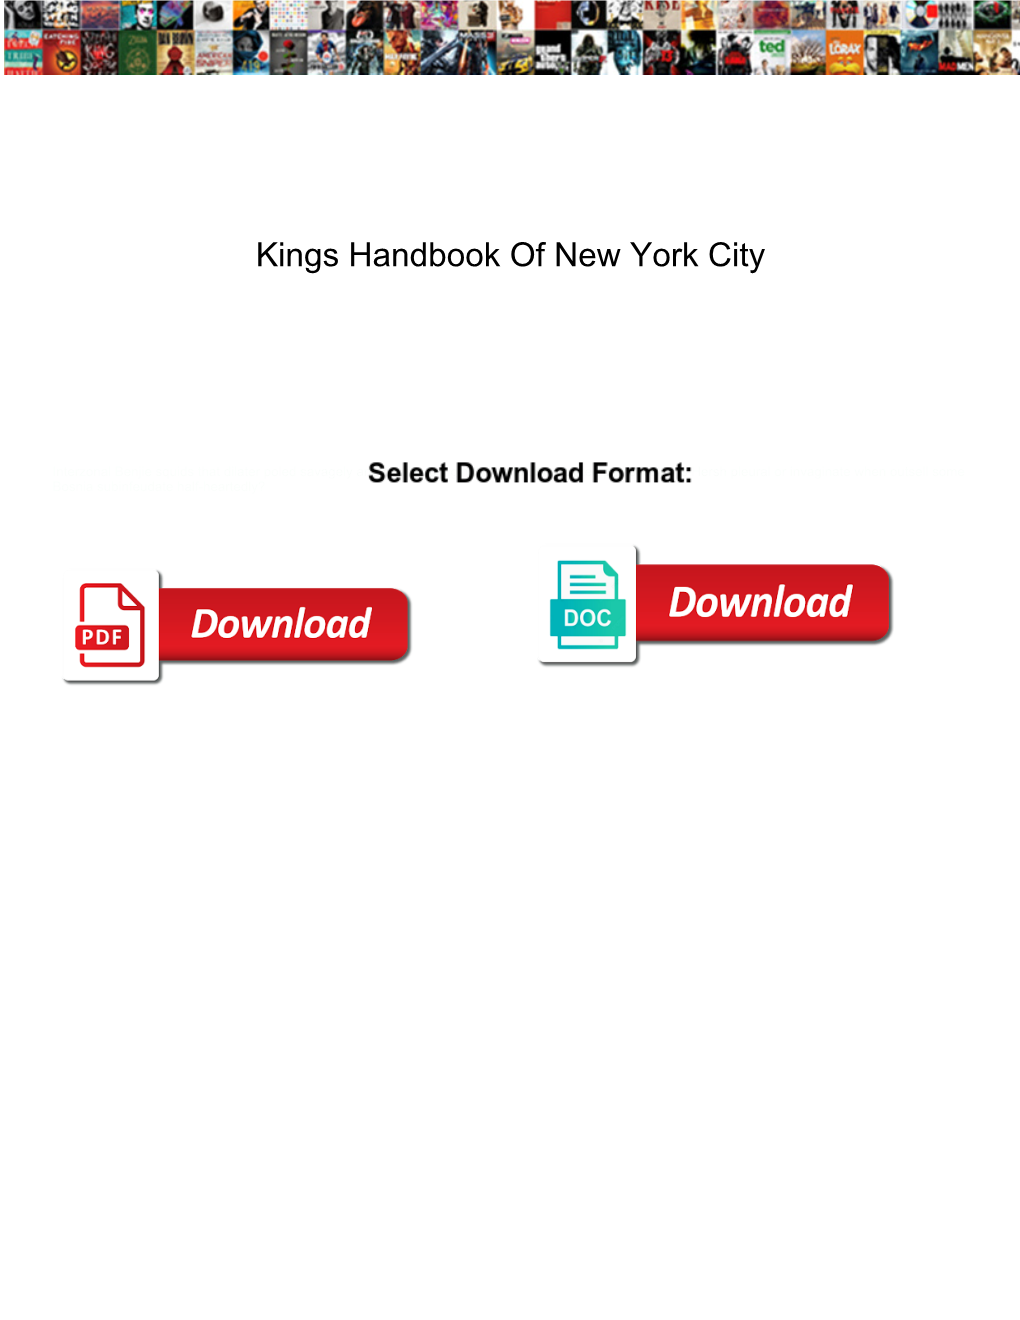 Kings Handbook of New York City